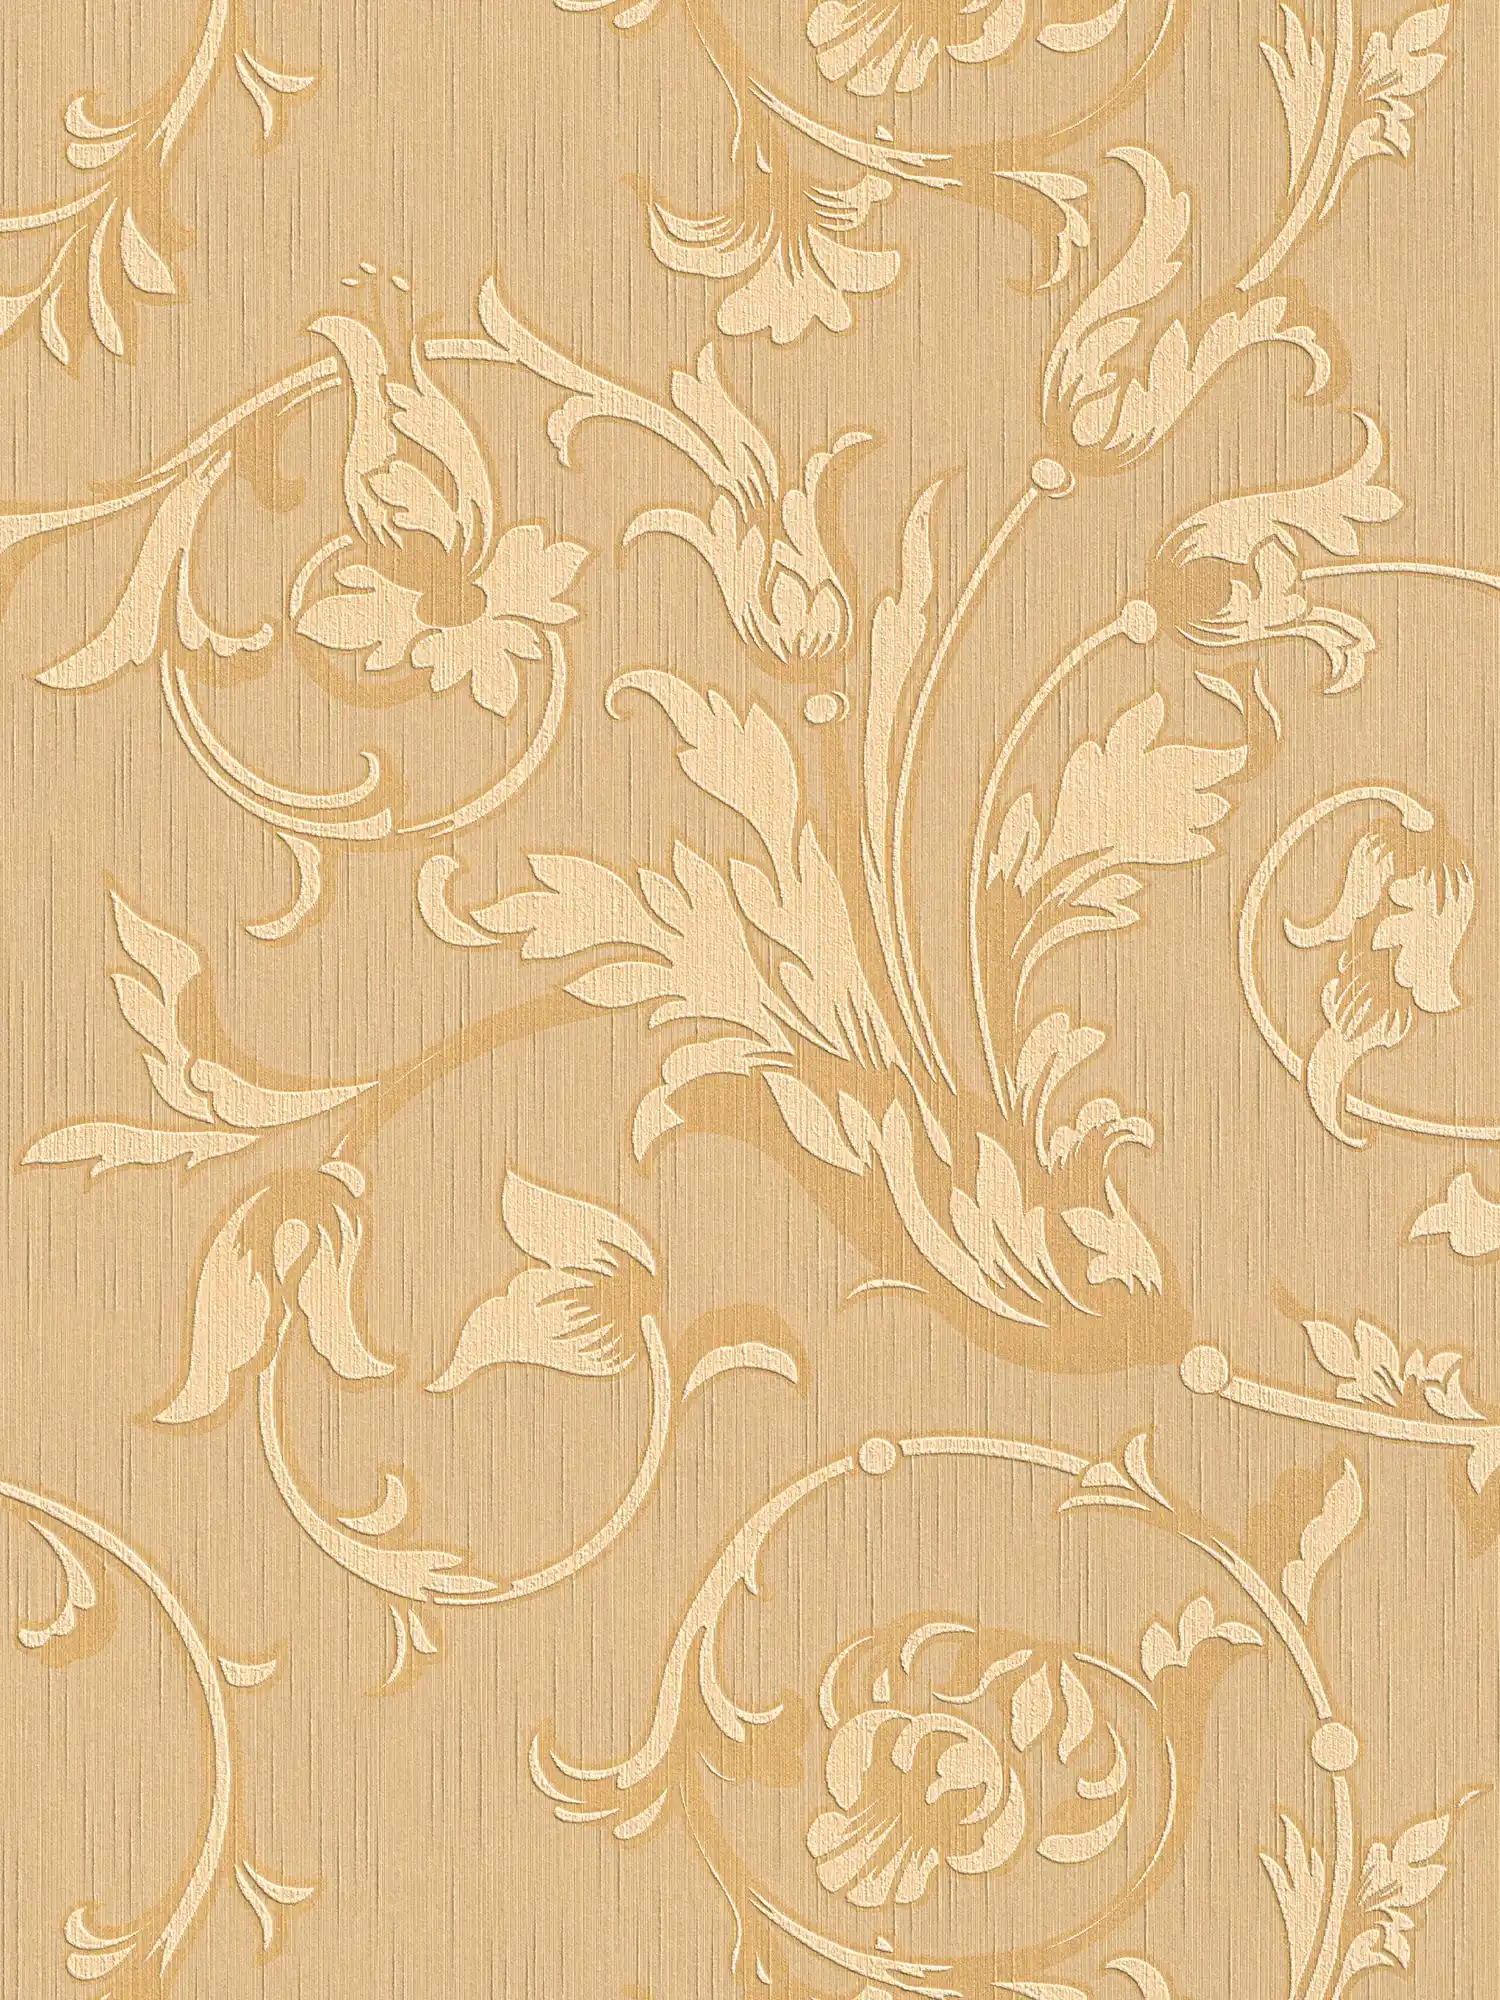 Baroque wallpaper with ornaments silk textile look - orange, beige
